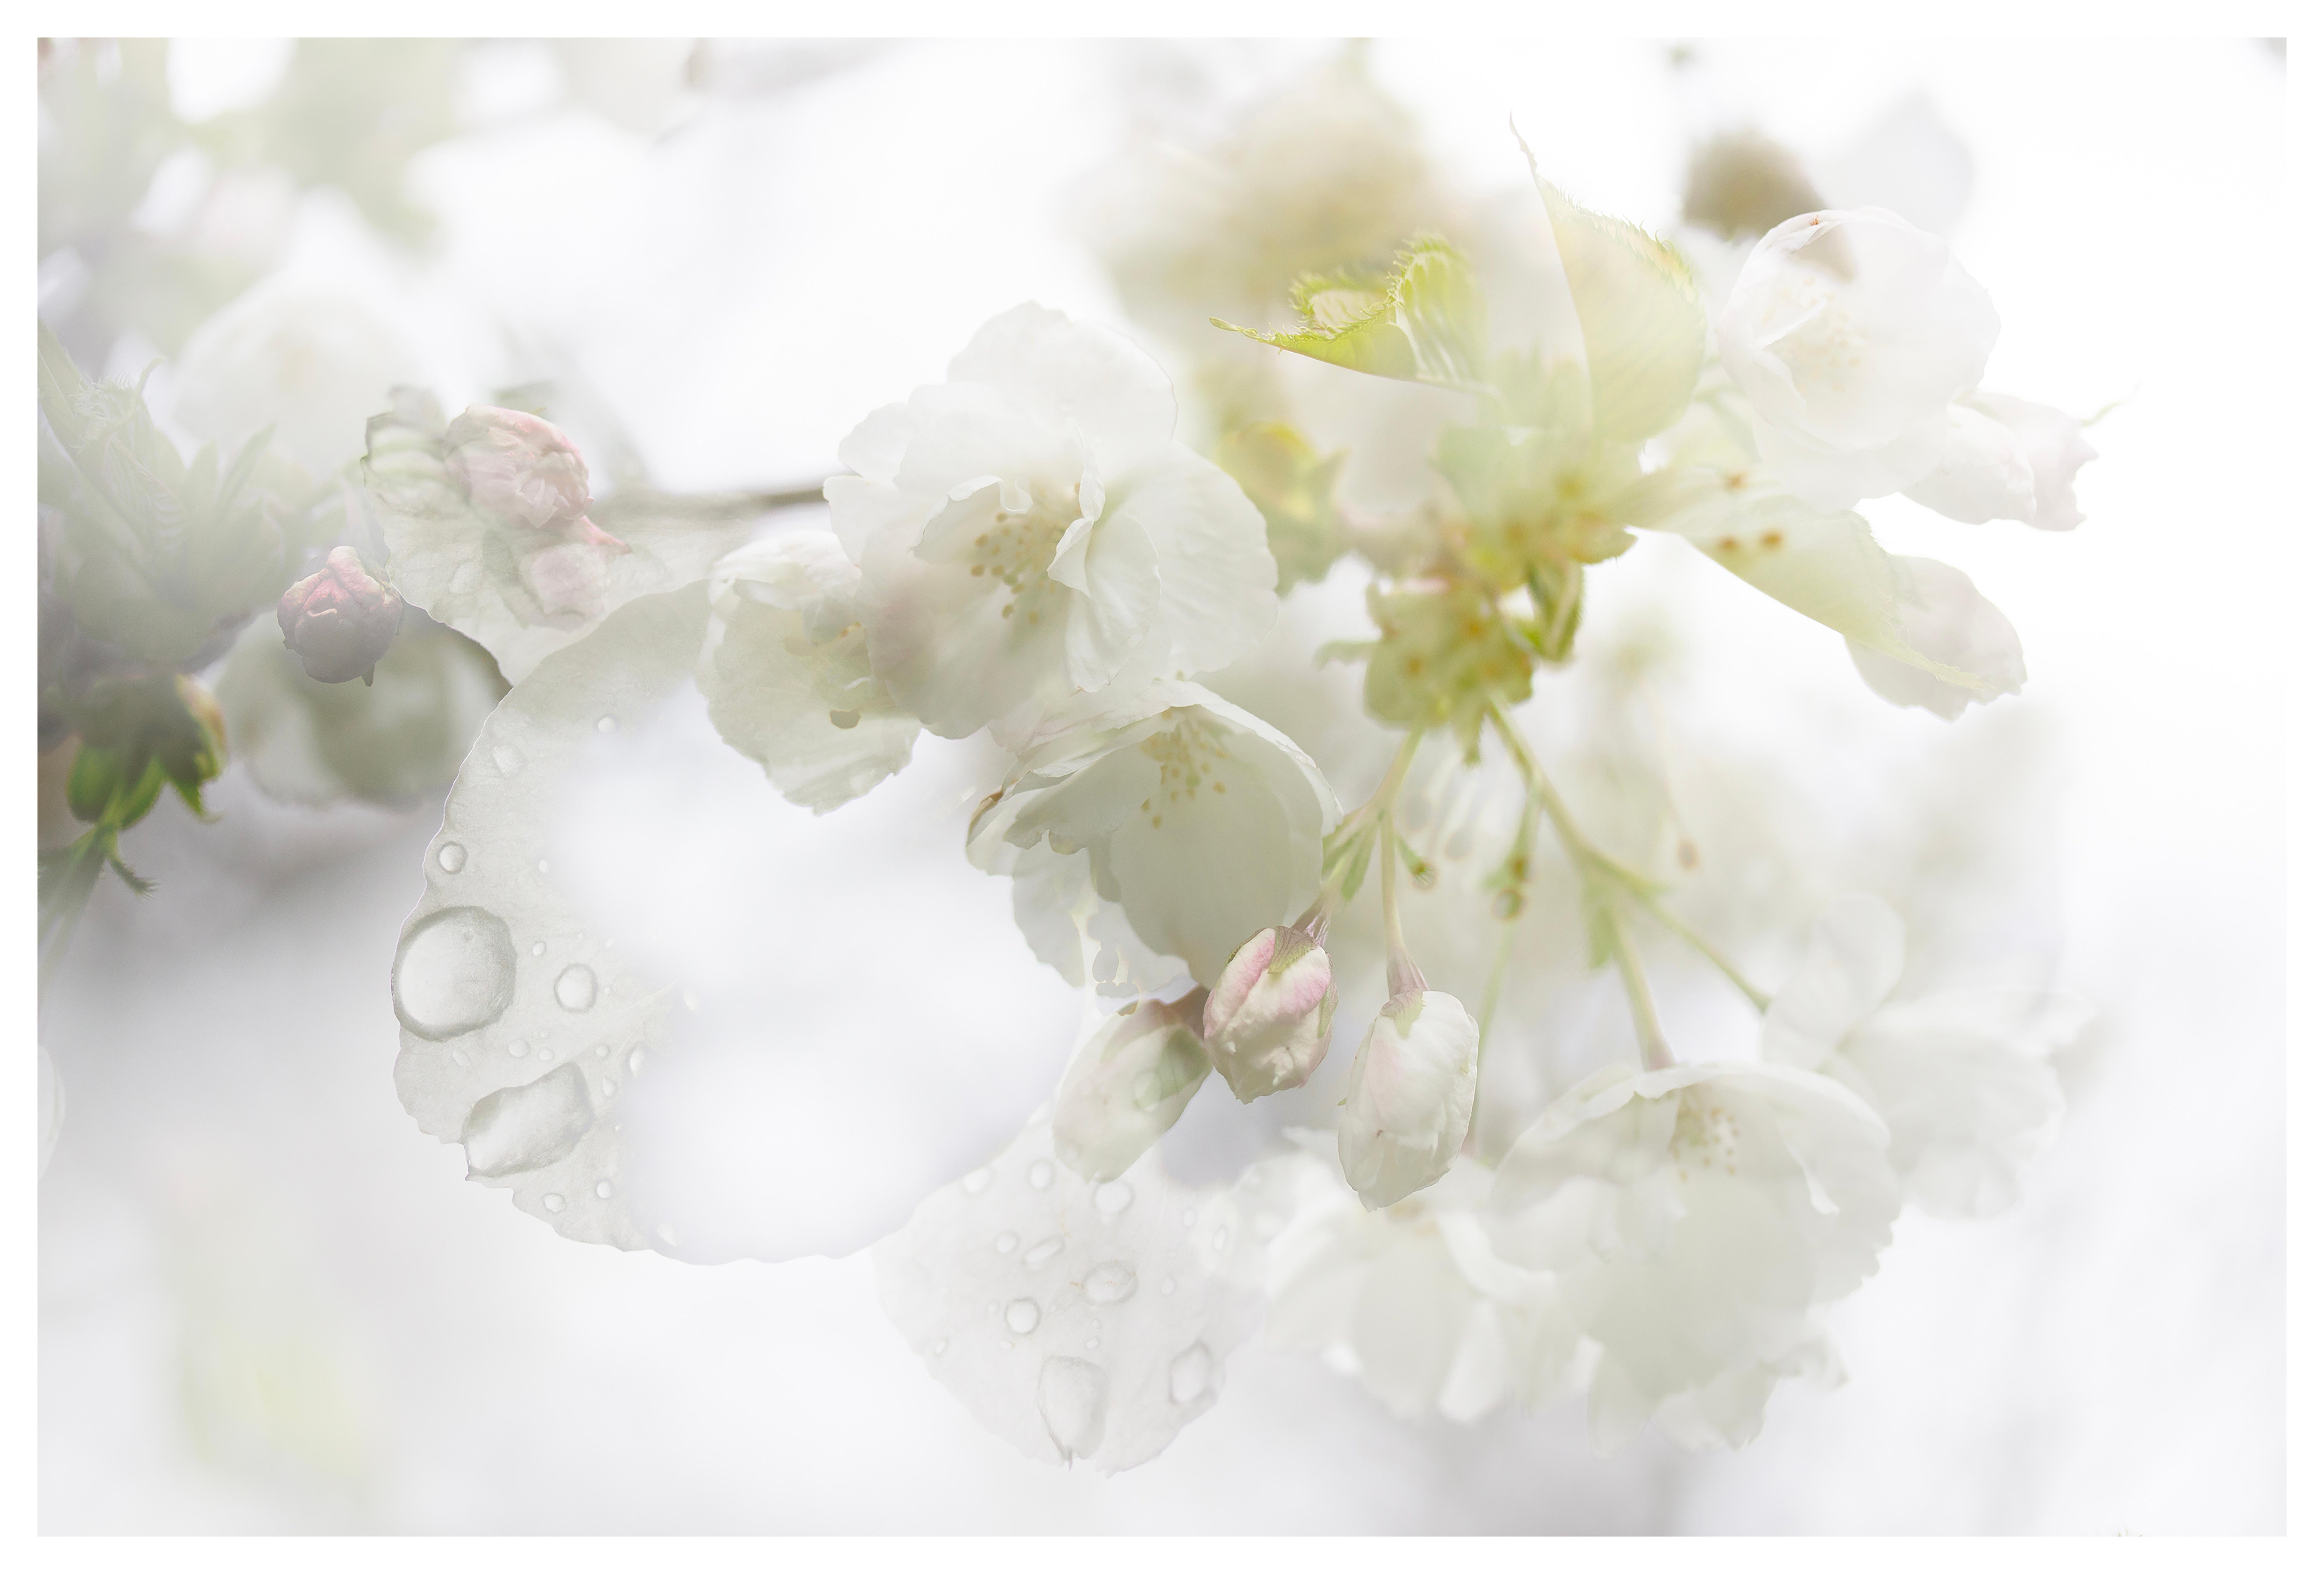 'Spring Rain' Large Scale Photograph Cherry blossom Sakura flowers green white